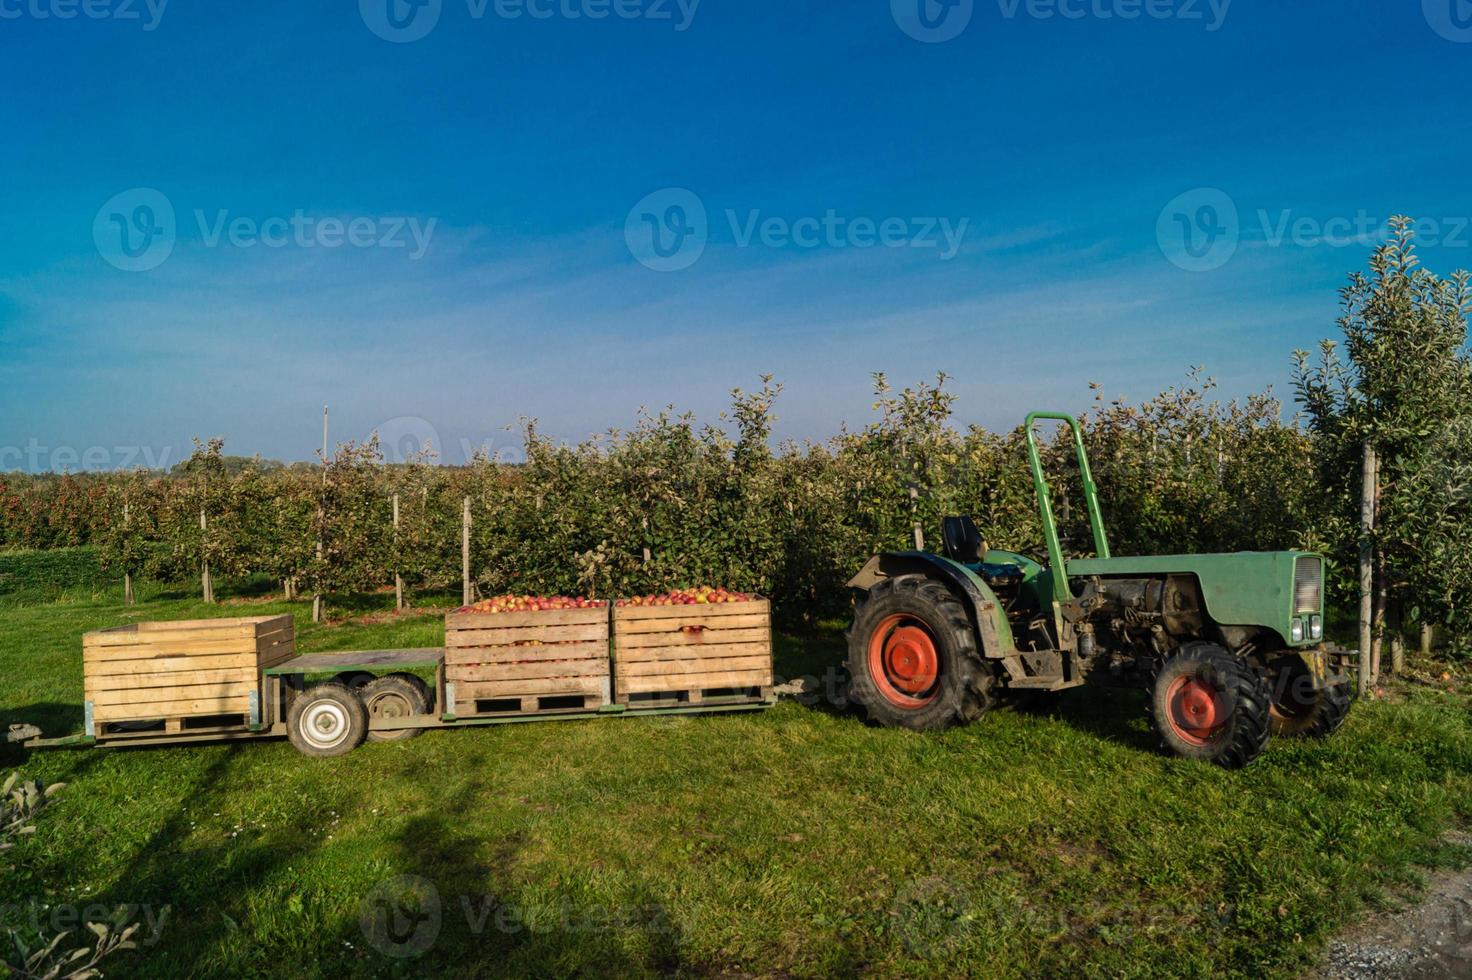 Apple harvest in the old Land Hamburg photo